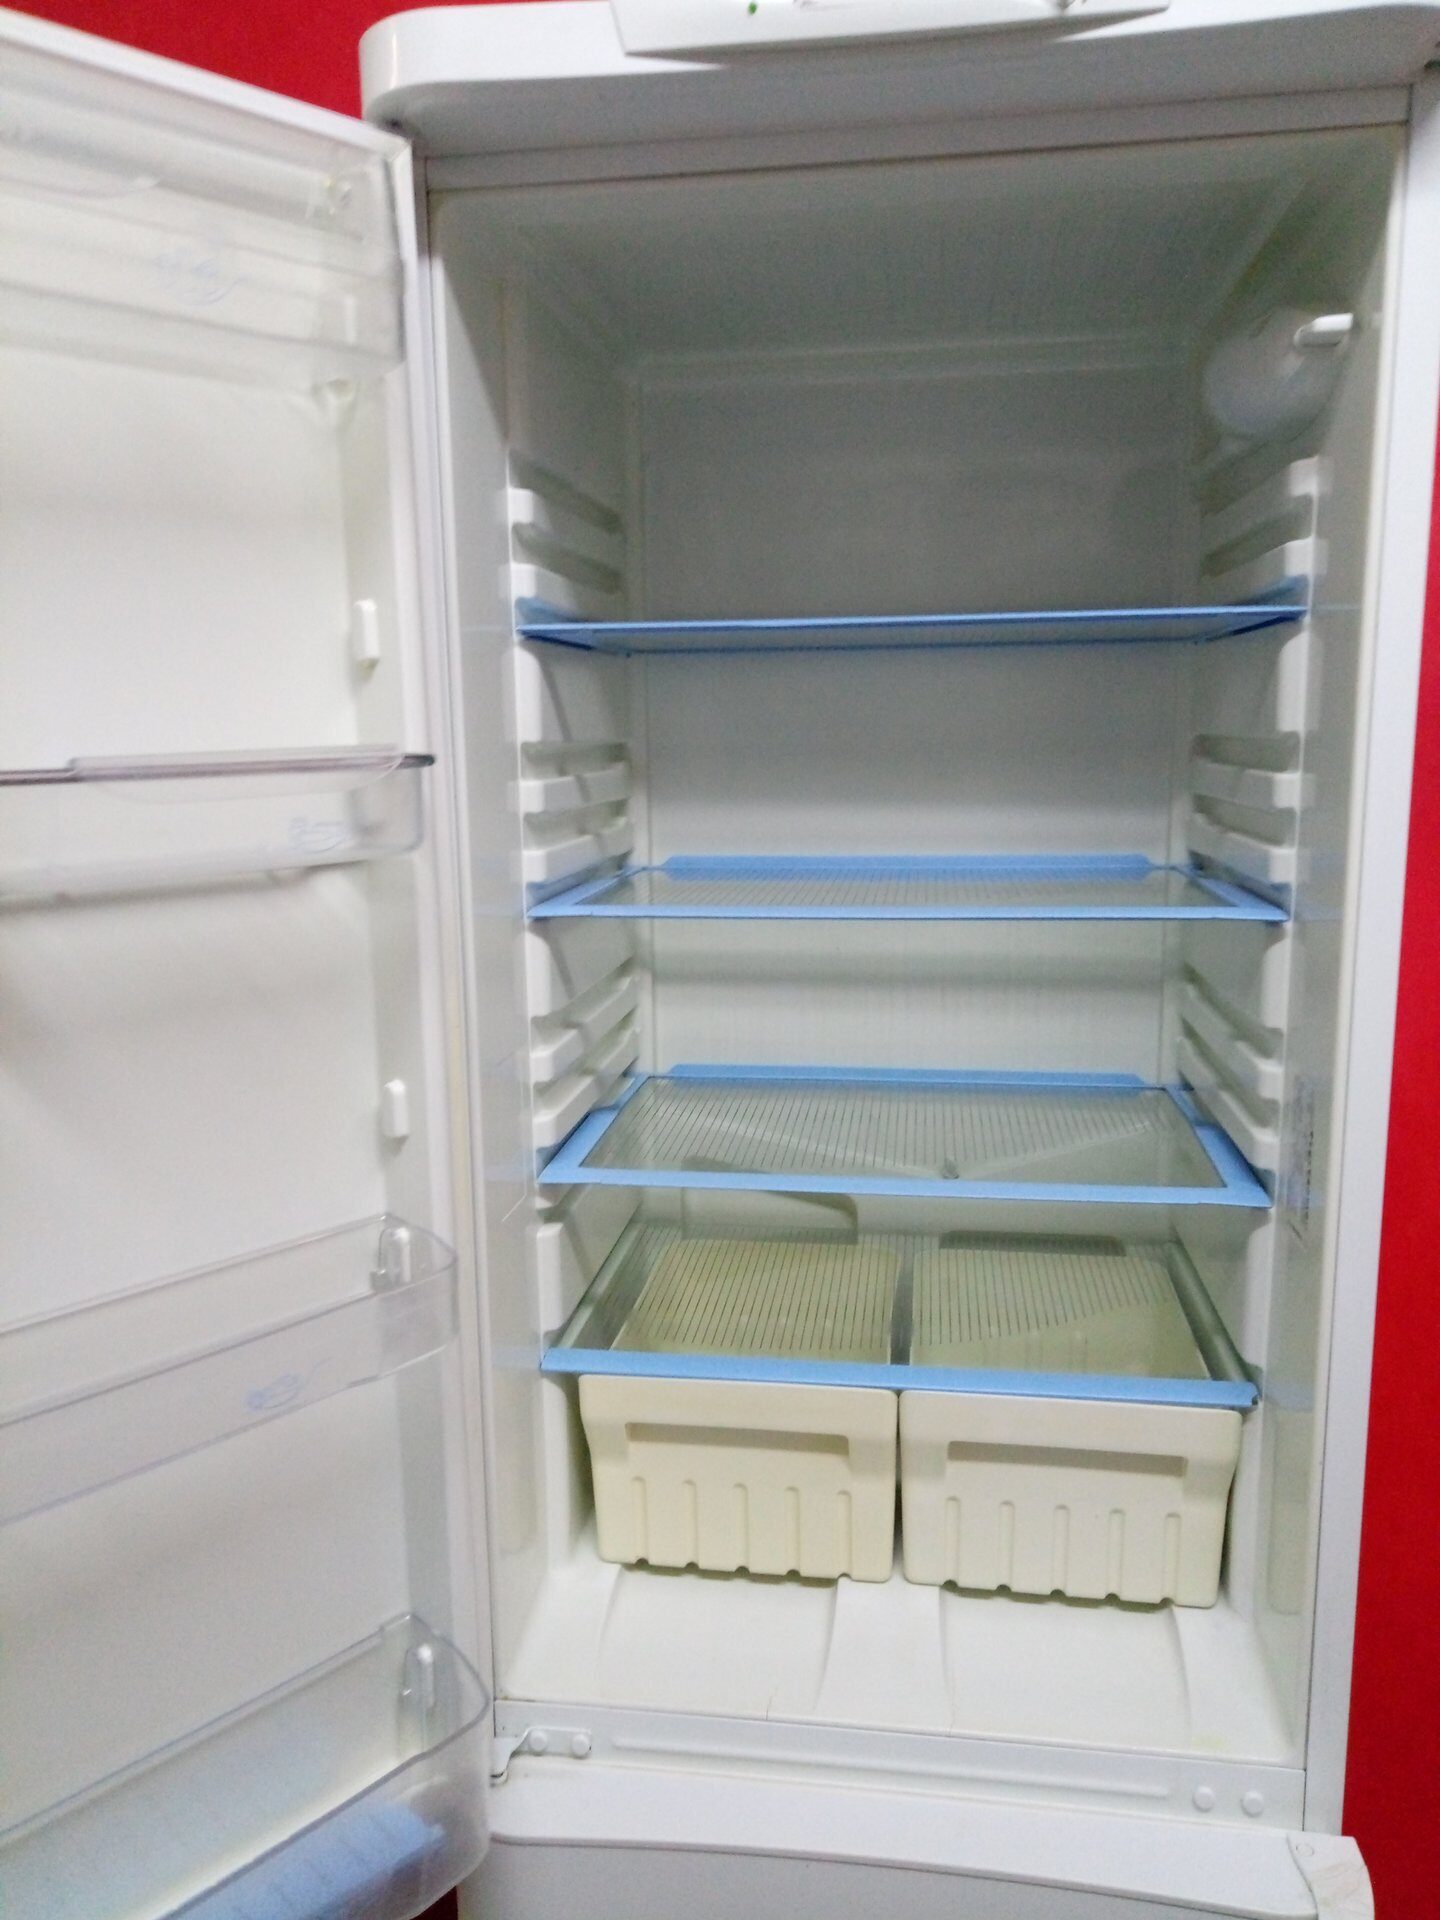 Холодильник купить цена индезит. Индезит c 138g s холодильник. Индезит с138g.016. Холодильник Индезит двухкамерный с138g 016.